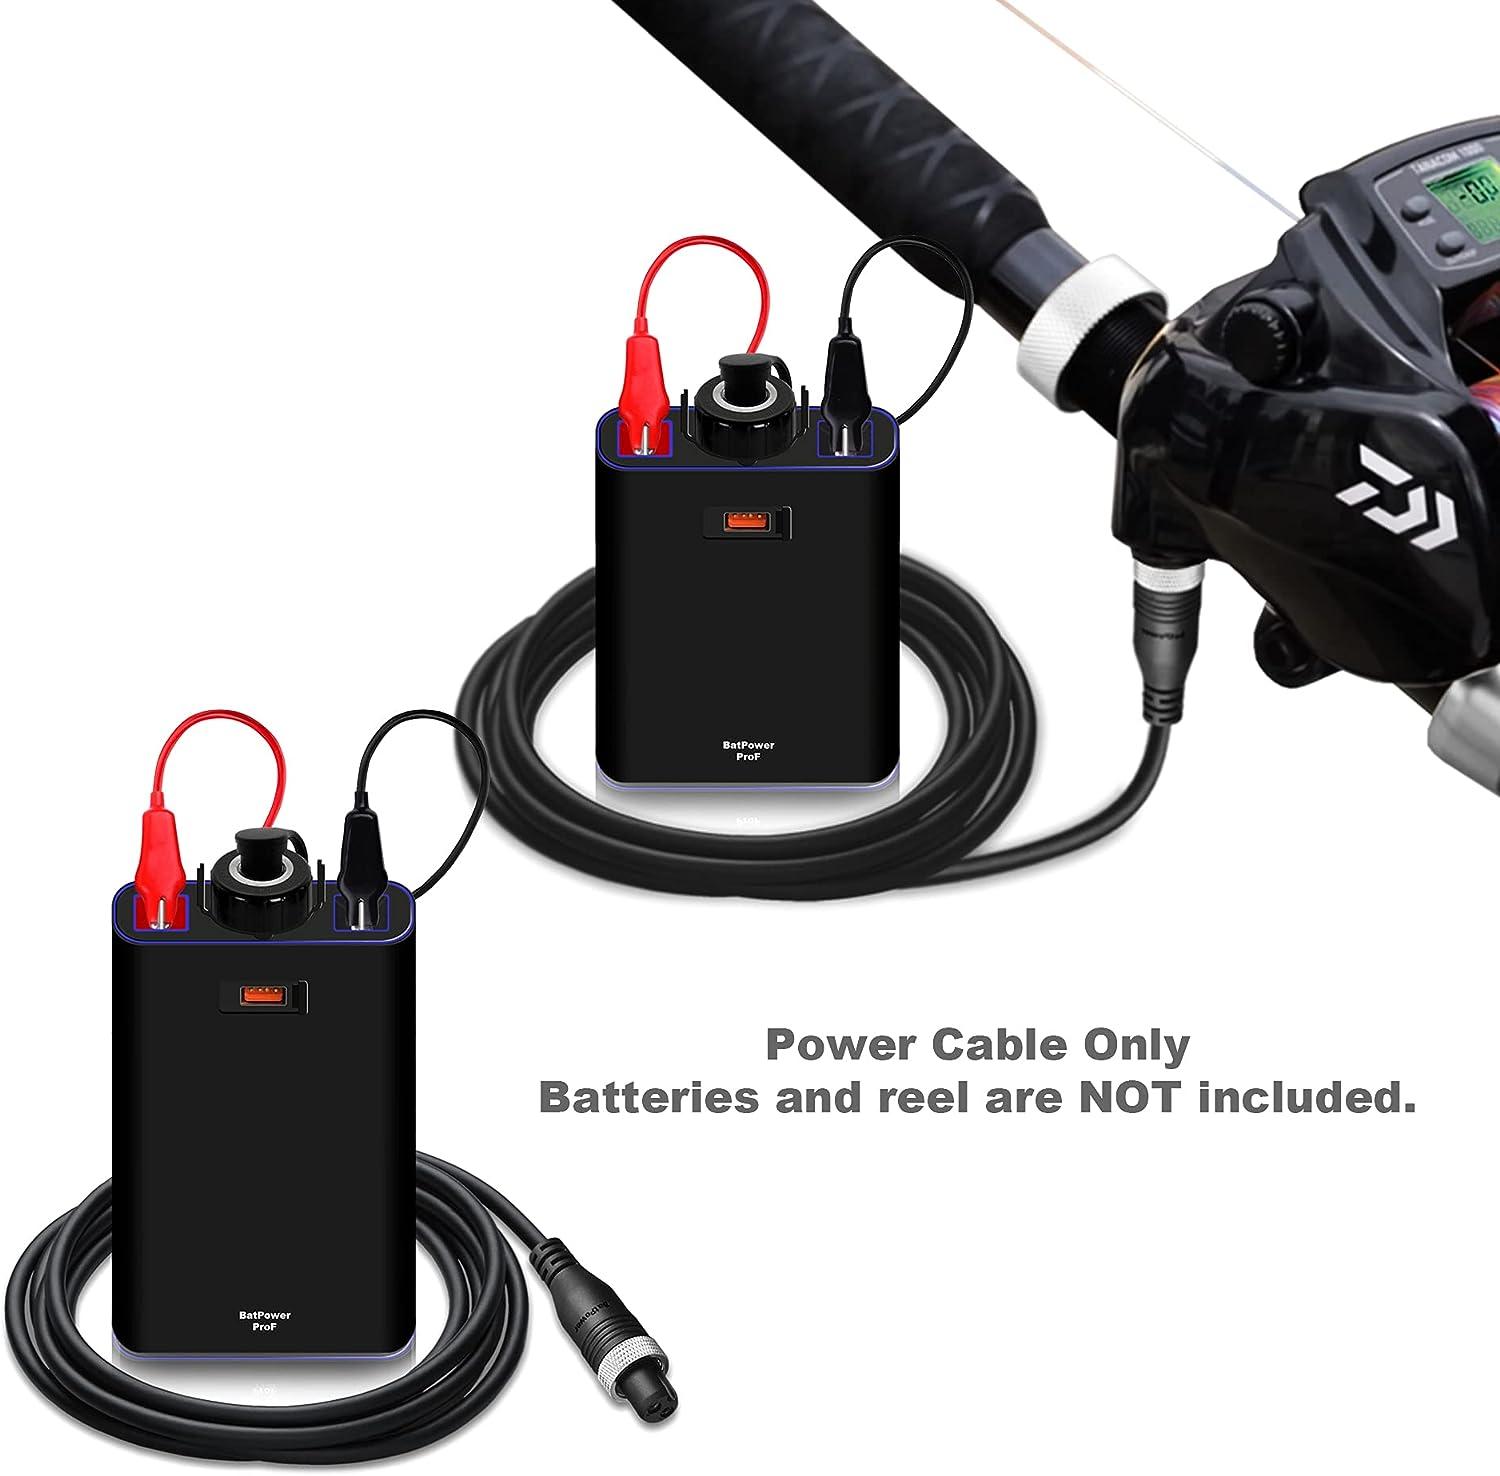 BatPower ProF Electric Reel Battery Charger for Daiwa BM2600 BM2900 LB SB RB